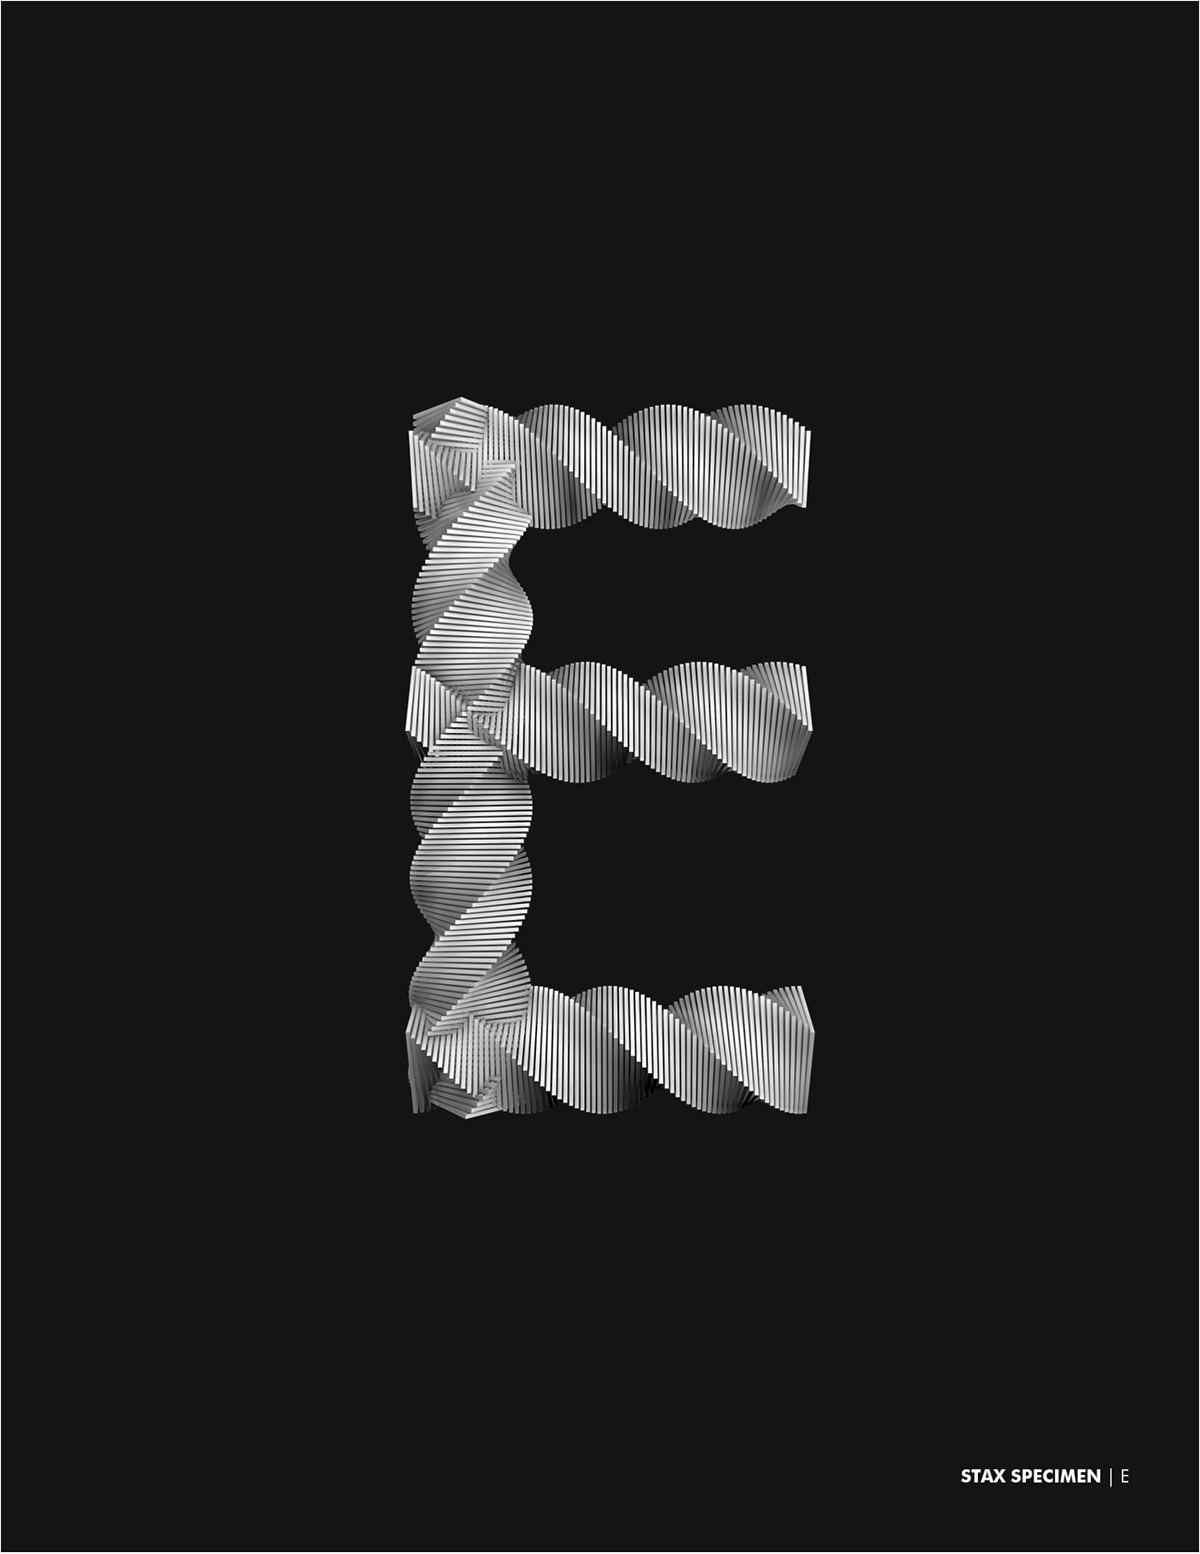 3D Typeface expressive Spiral helix